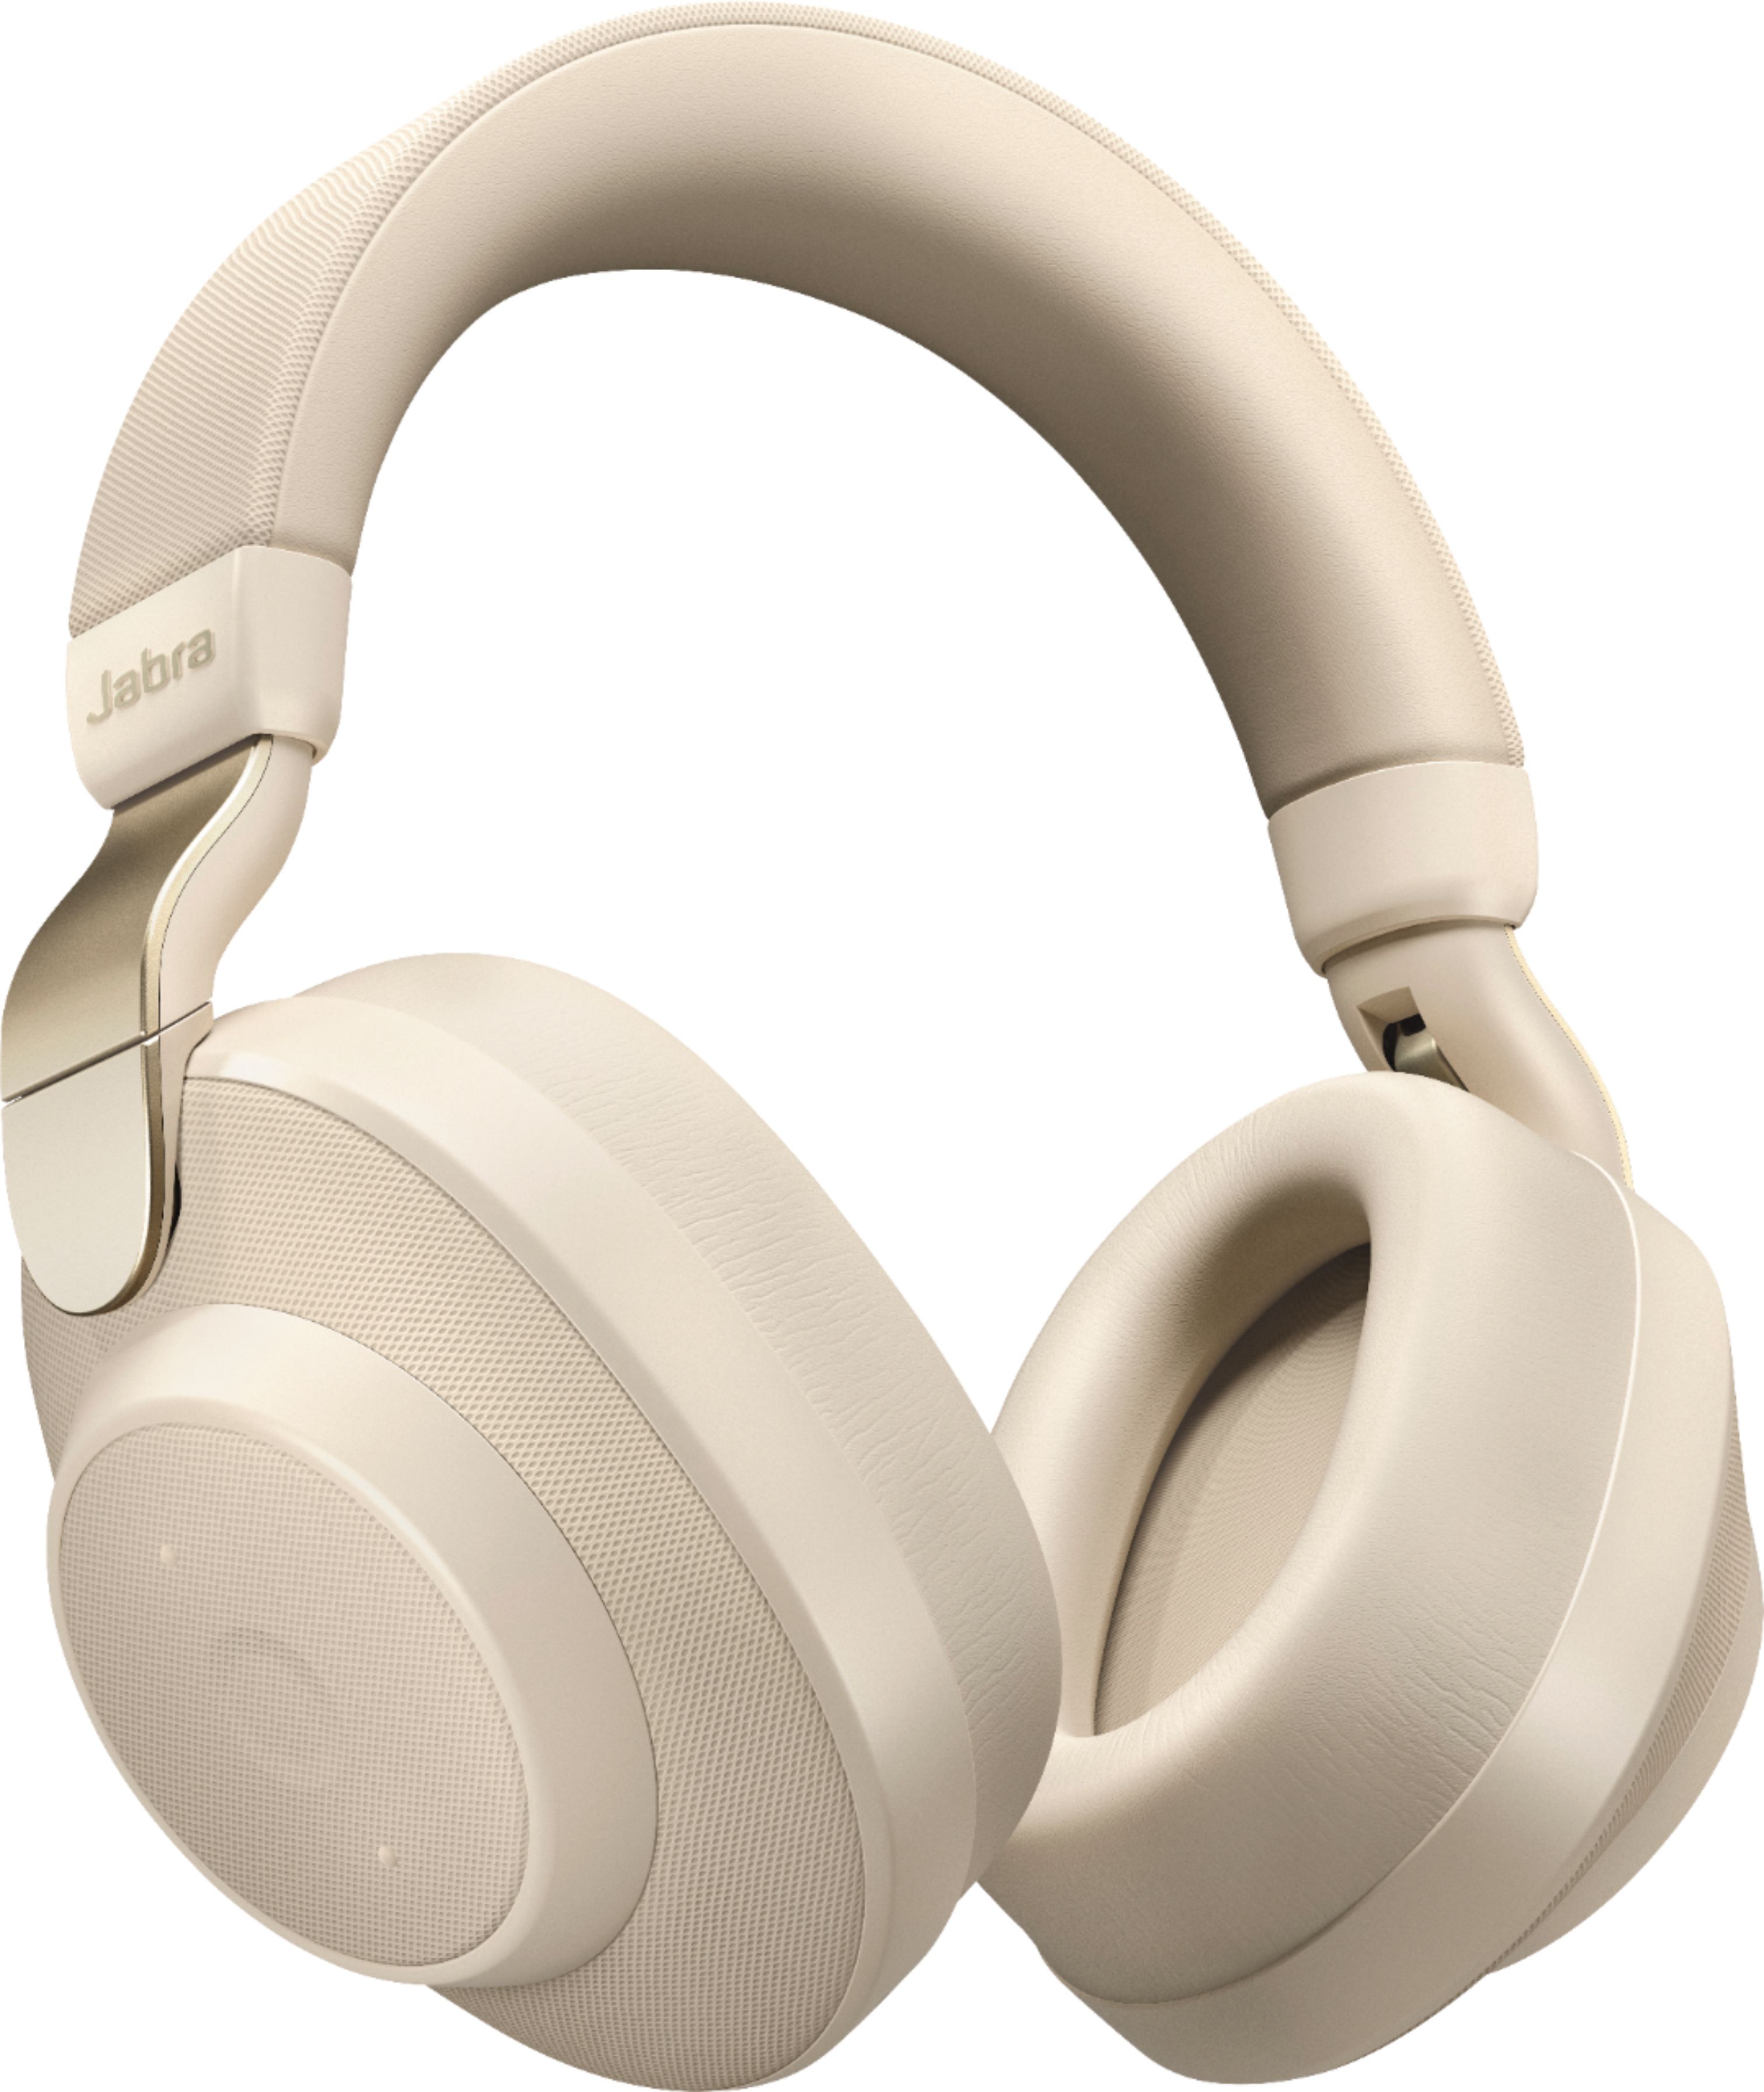 85h Jabra Elite 100-99030002-02 Over-the-Ear Best Wireless Gold Buy: Beige Cancelling Noise Headphones